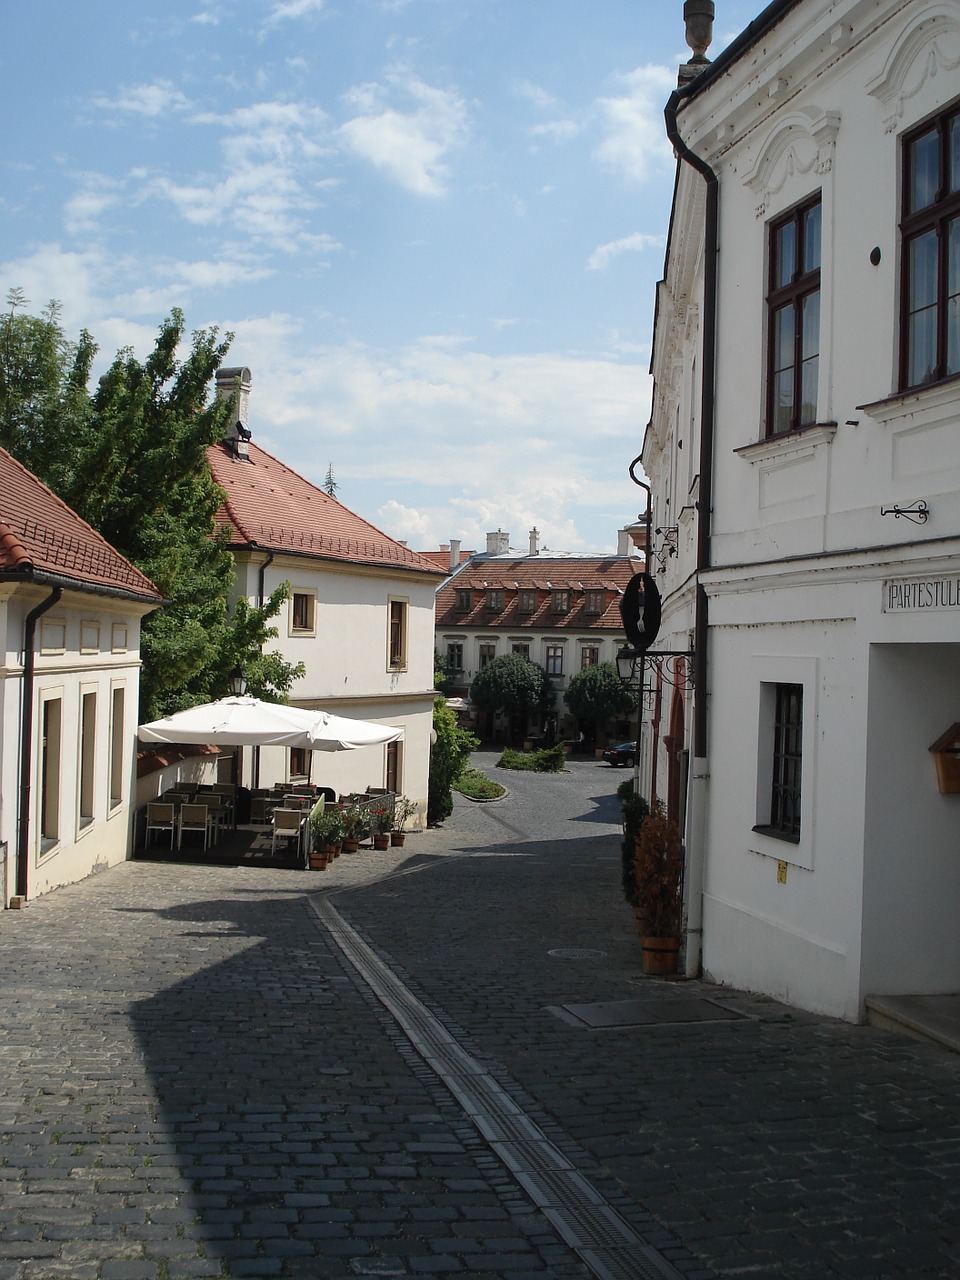 Veszprém - little street leading to the castle